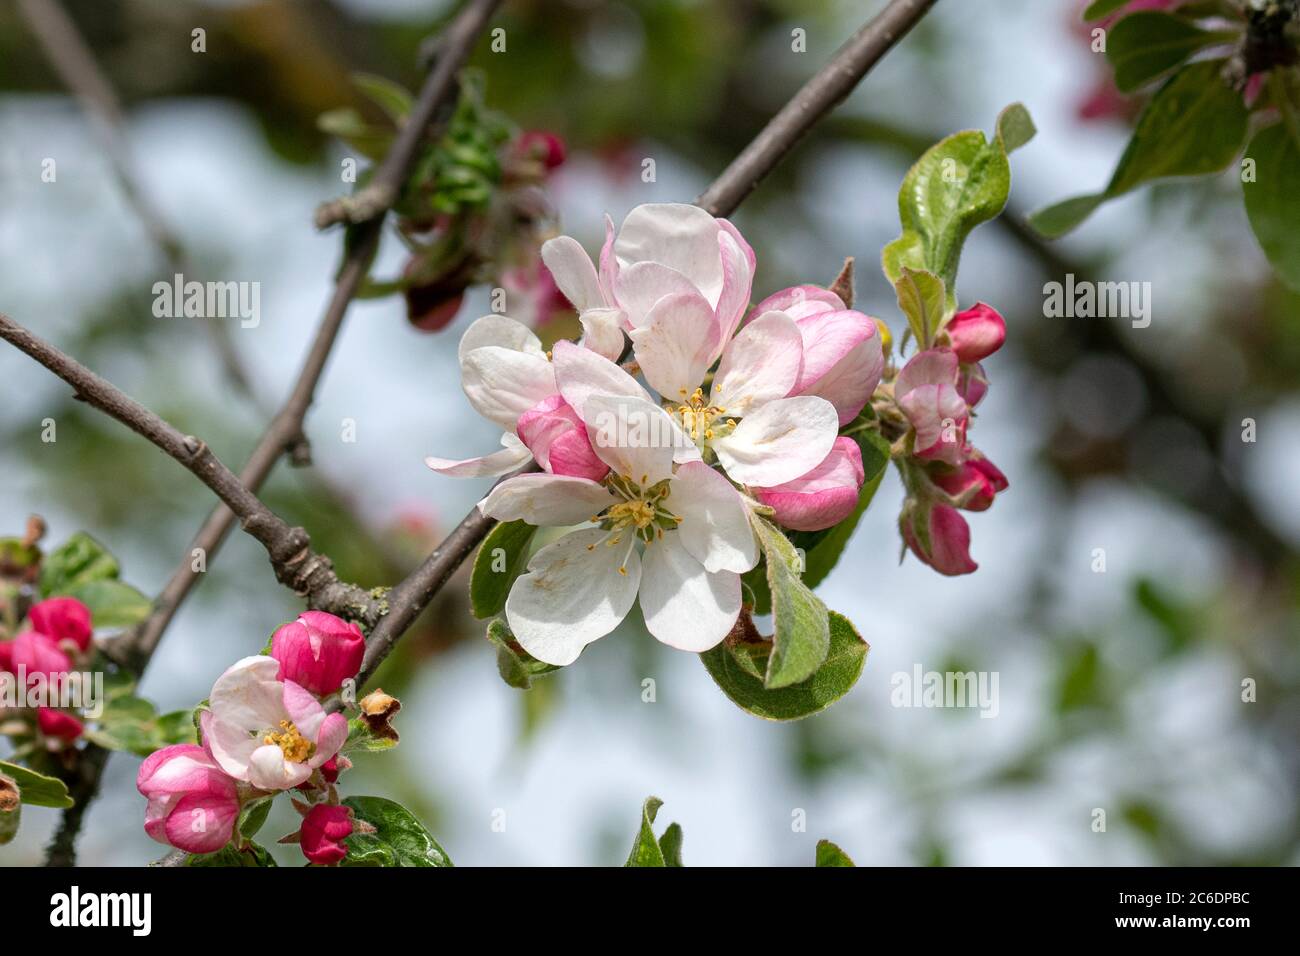 Zier-Apfel, Malus domestica Striped Beauty, Ornamental apple, Malus domestica Striped Beauty Stock Photo